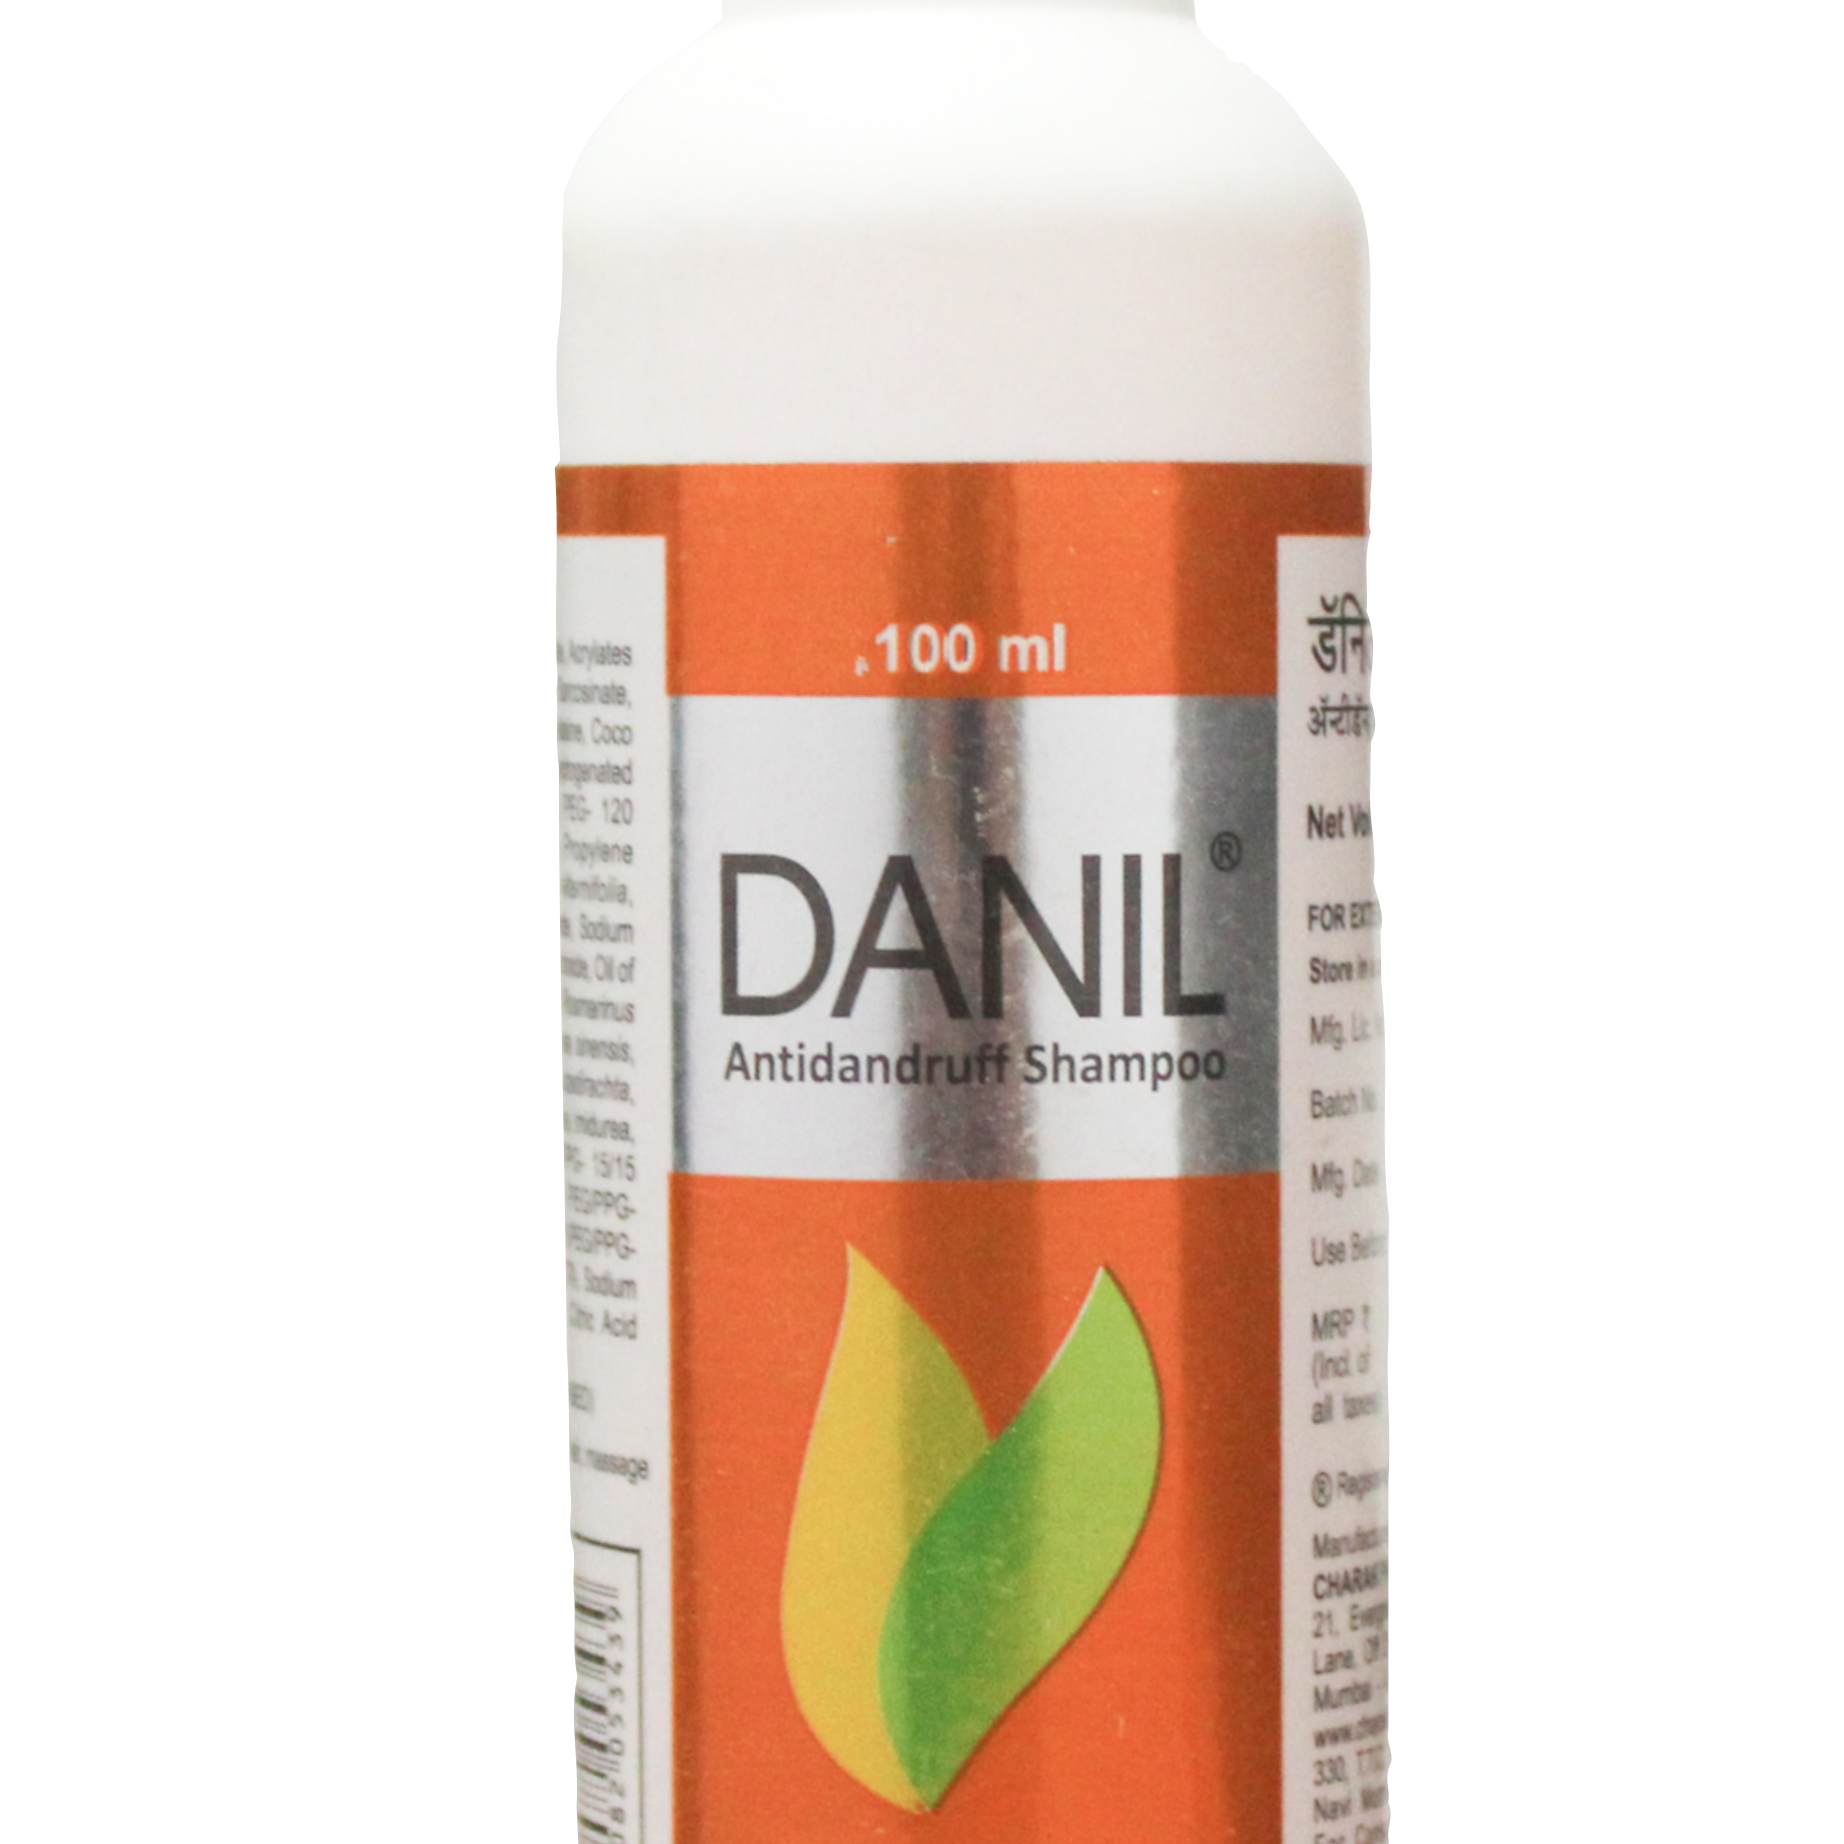 Shop Danil anti dandruff shampoo 100ml at price 230.00 from Charak Online - Ayush Care